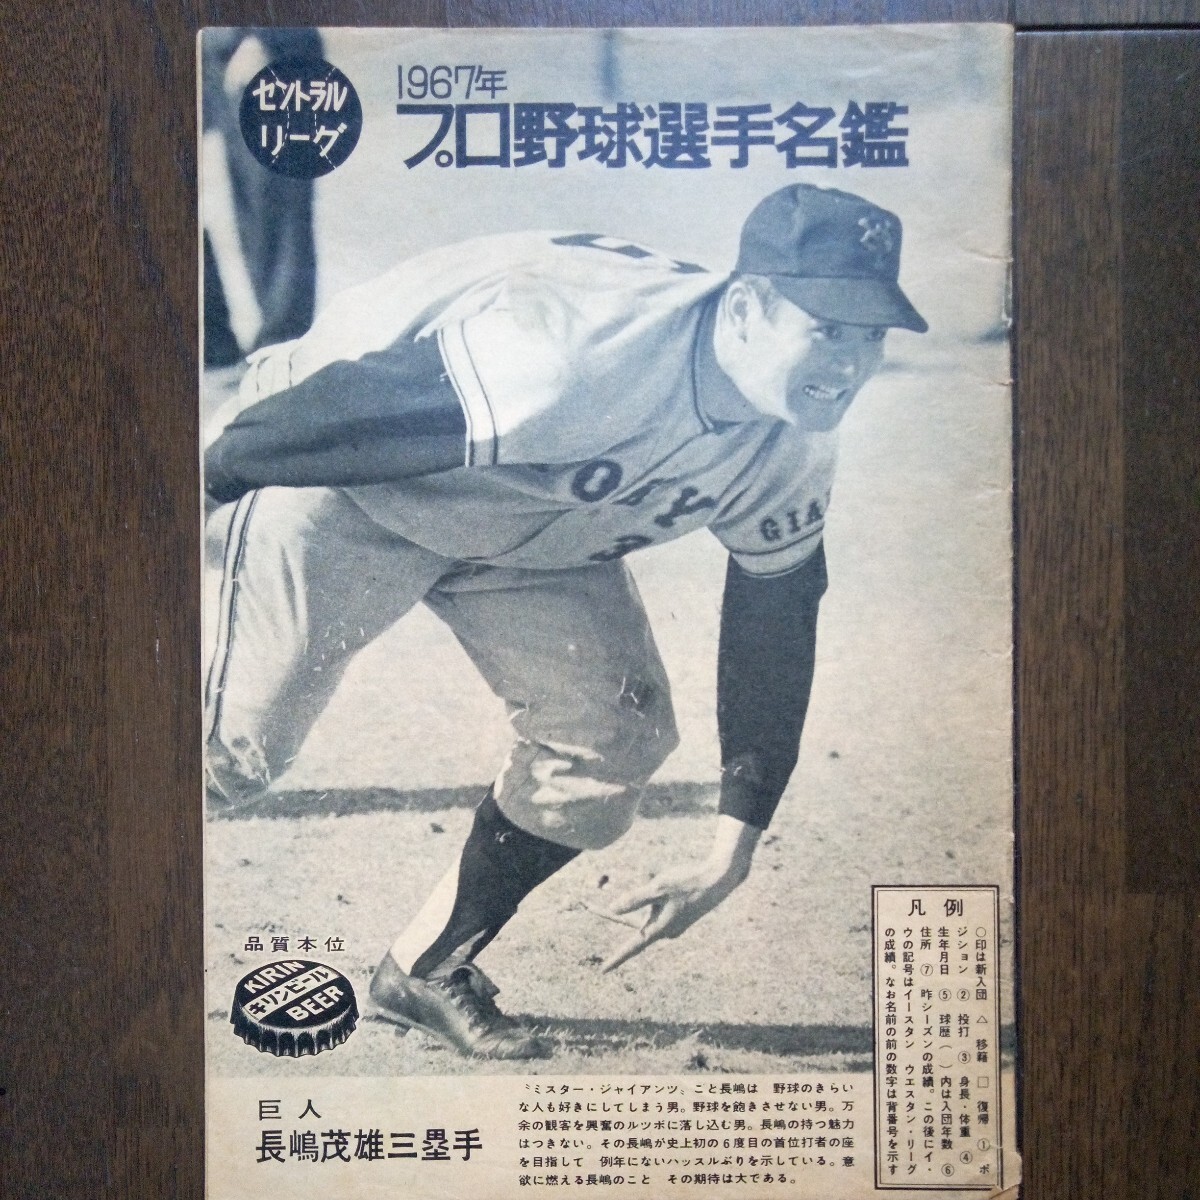 1967 year Professional Baseball player name .